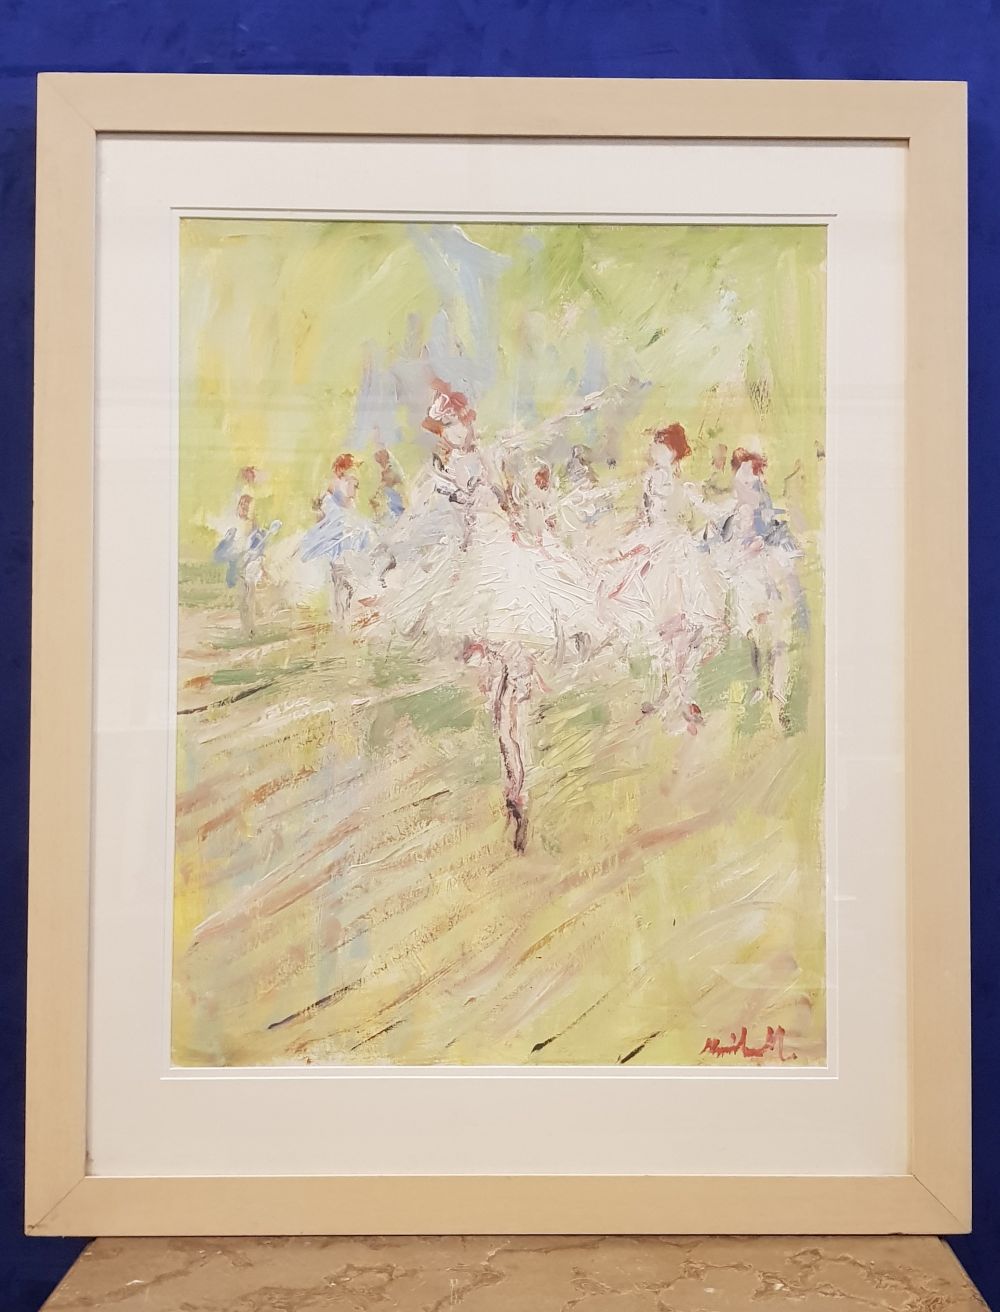 MARIE CARROLL, (IRISH 20TH CENTURY), "DANCING BALLERINAS", acrylic on card, signed lower right,